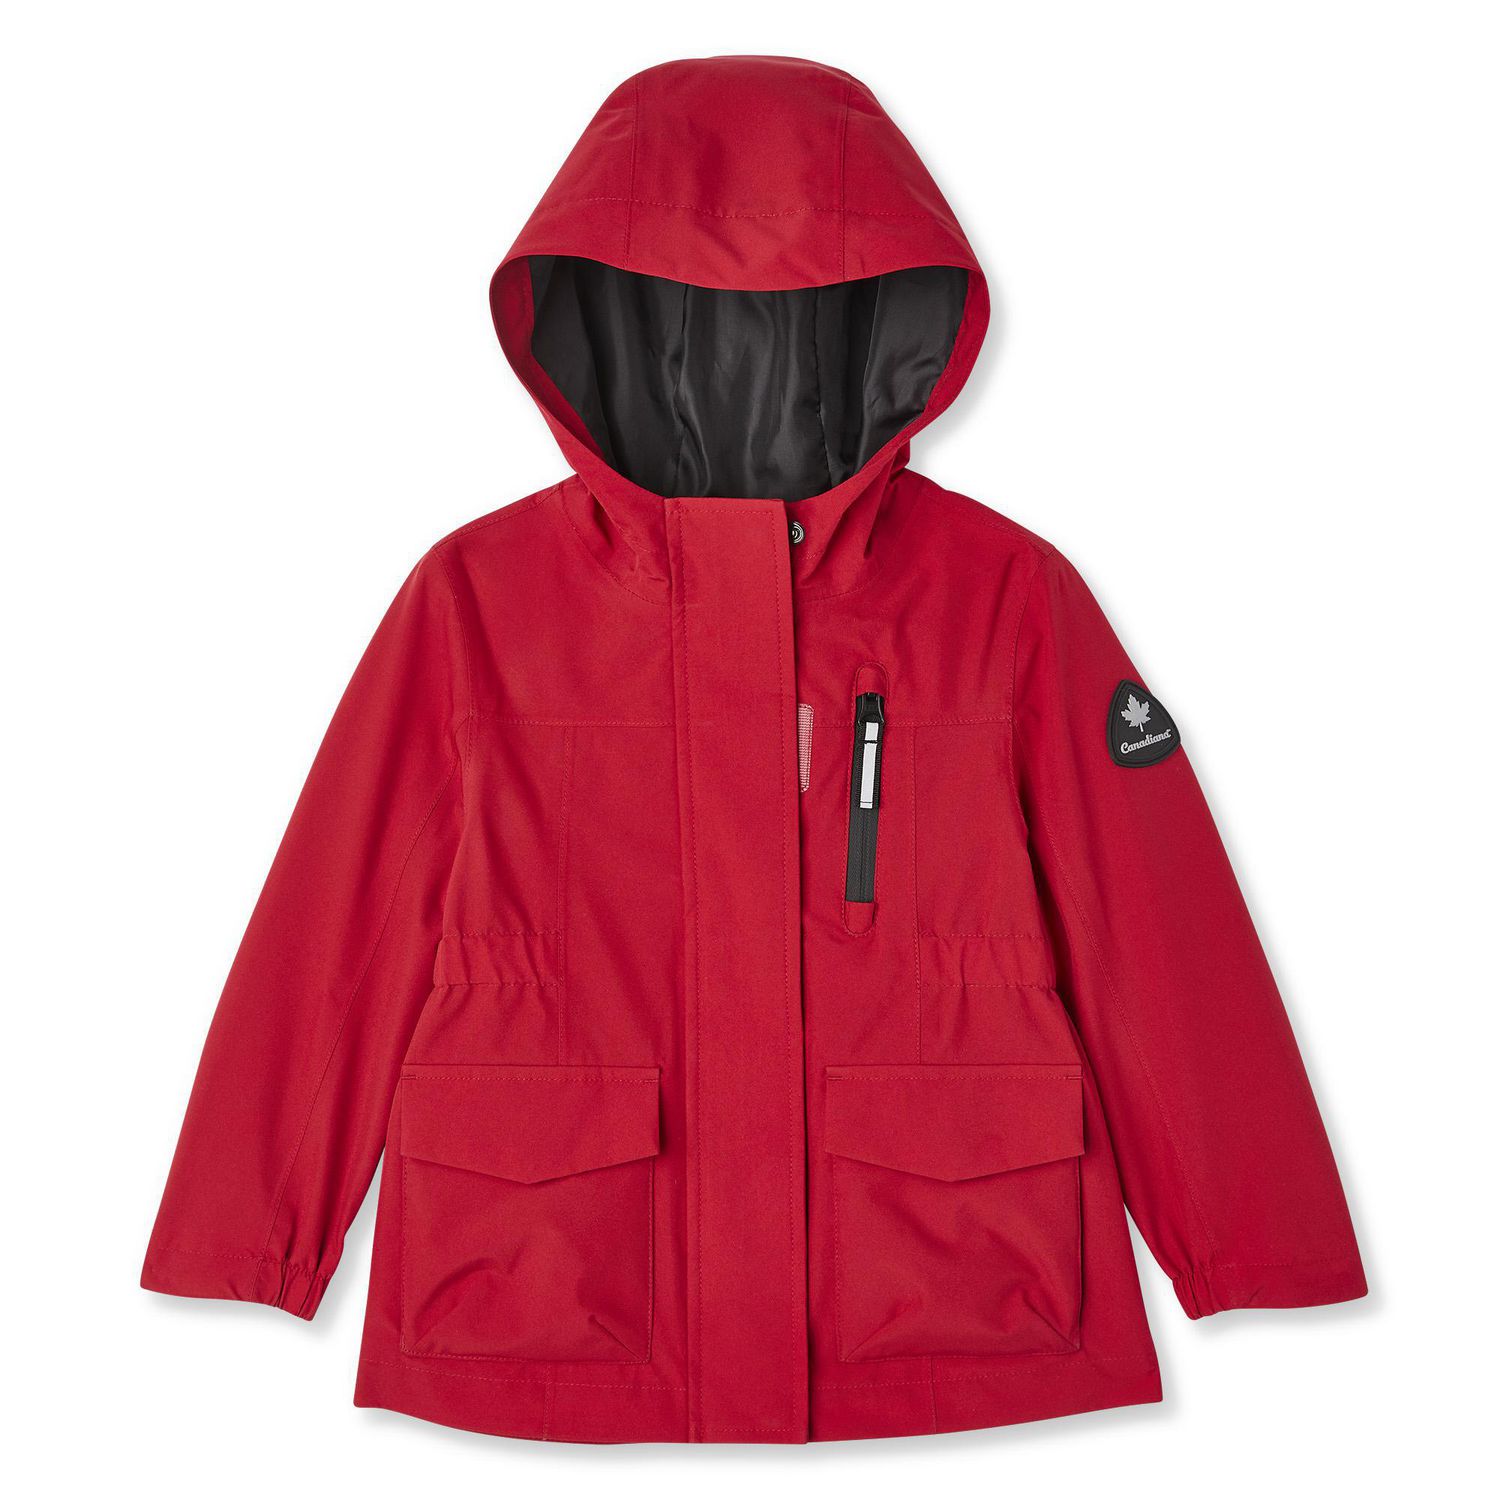 Canadiana Toddler Girls' Rain Jacket | Walmart Canada